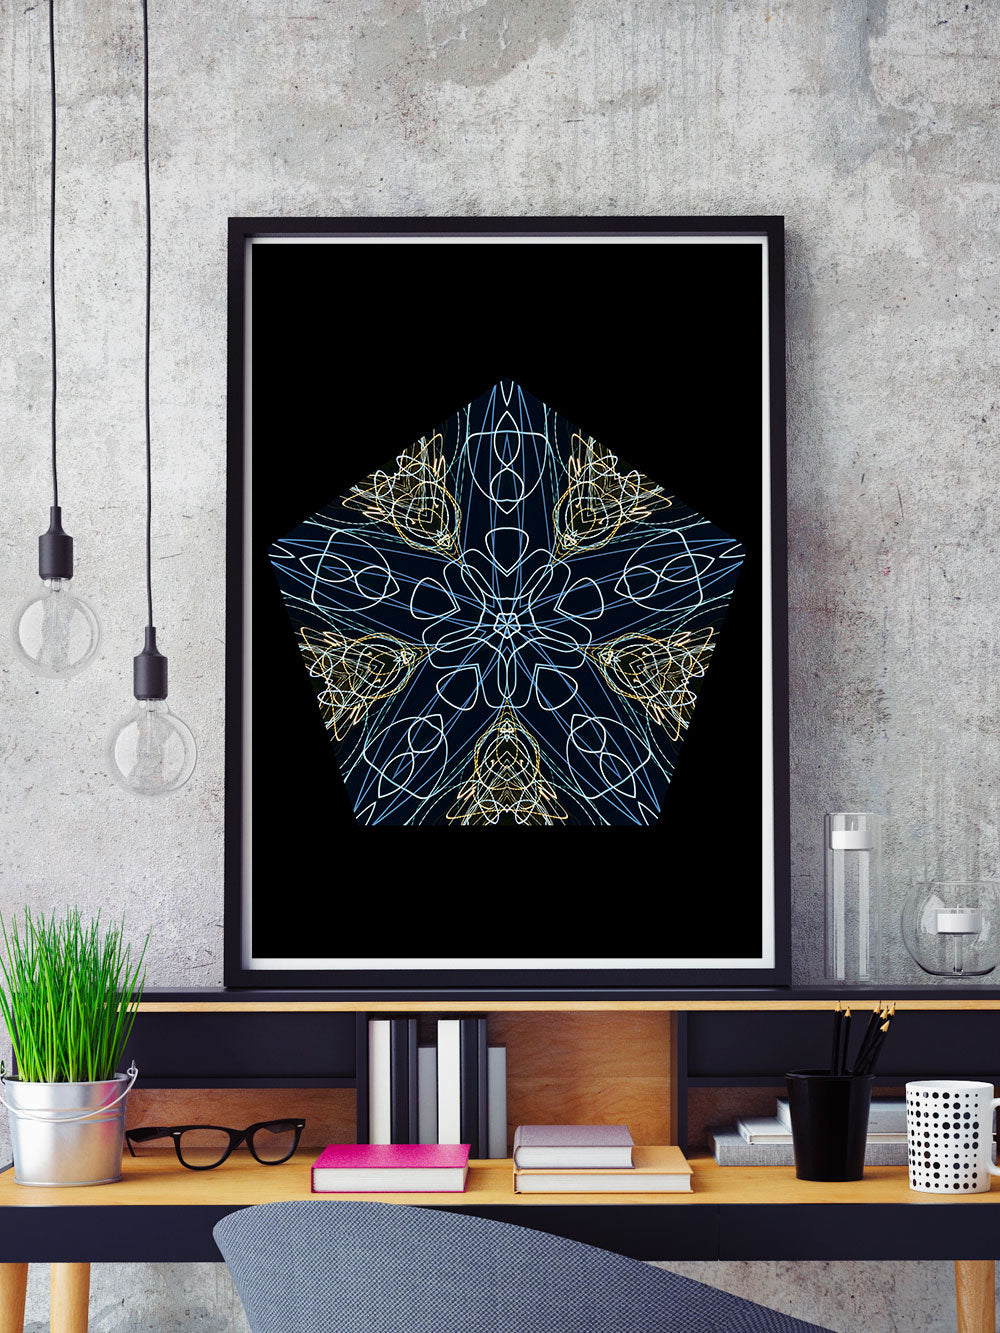 Tron Kaleidoscope Print in a frame on a shelf